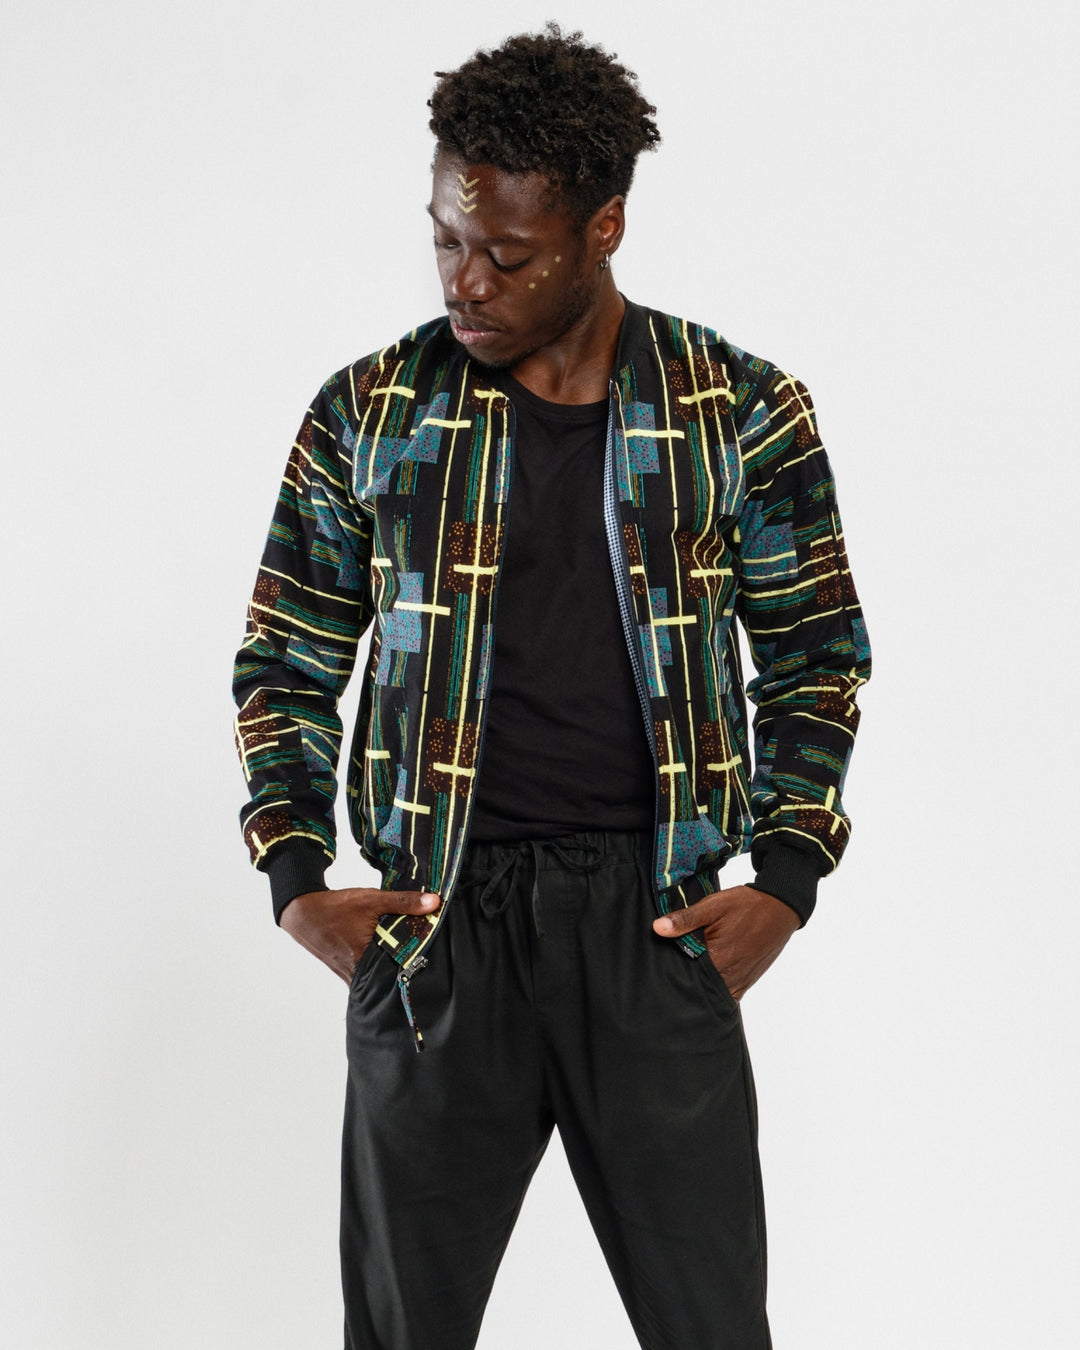 Wendejacke ‚Mistari‘ für 99 € - mikono.africa Jacken aus Kenia bunte Bomberjacke Partyjacke faire sozial nachhaltig designed in Kenia